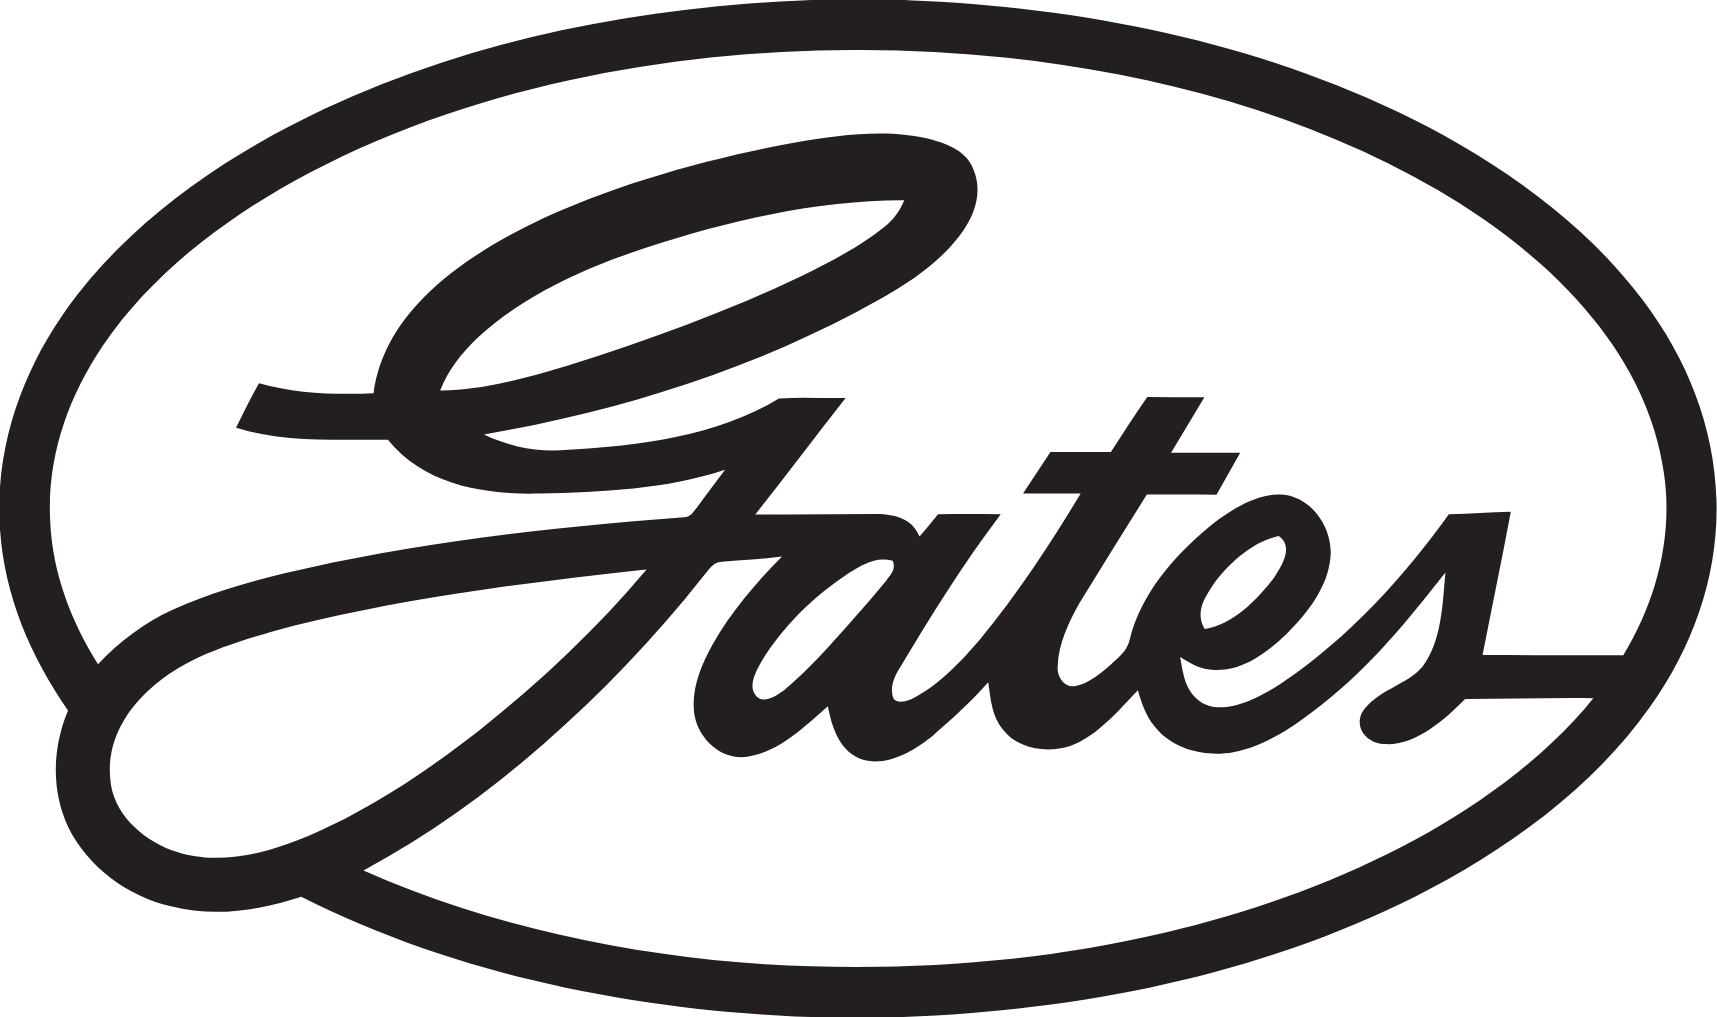 Gates Industrial Corp logo (PNG transparent)